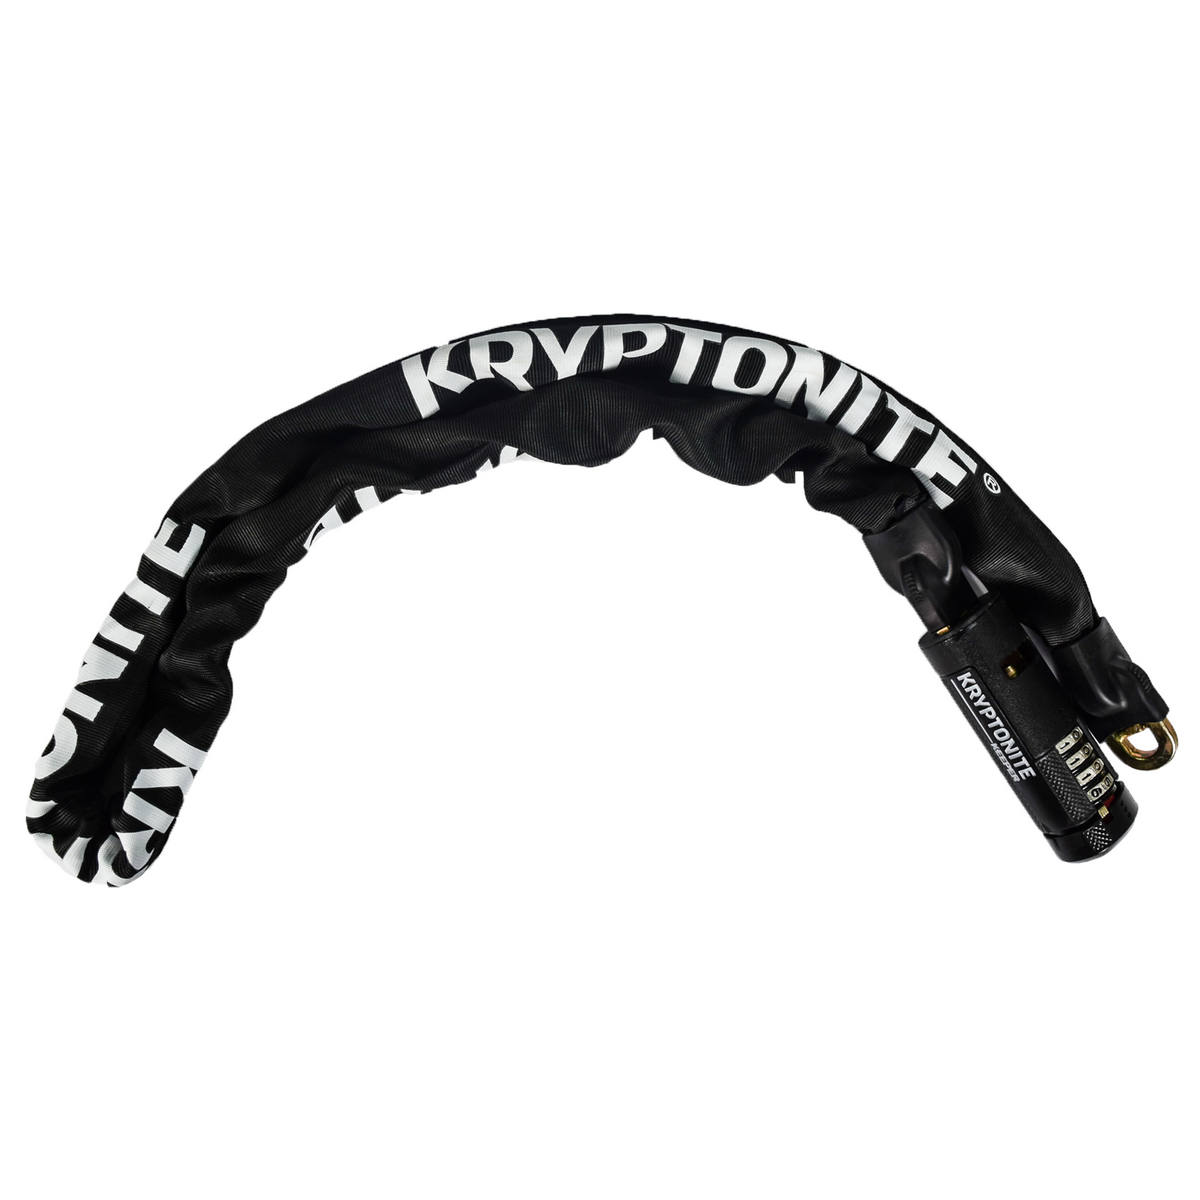 Kryptonite 003298 Keeper 712 47" 4 Digit Resettable Combo Chain Lock